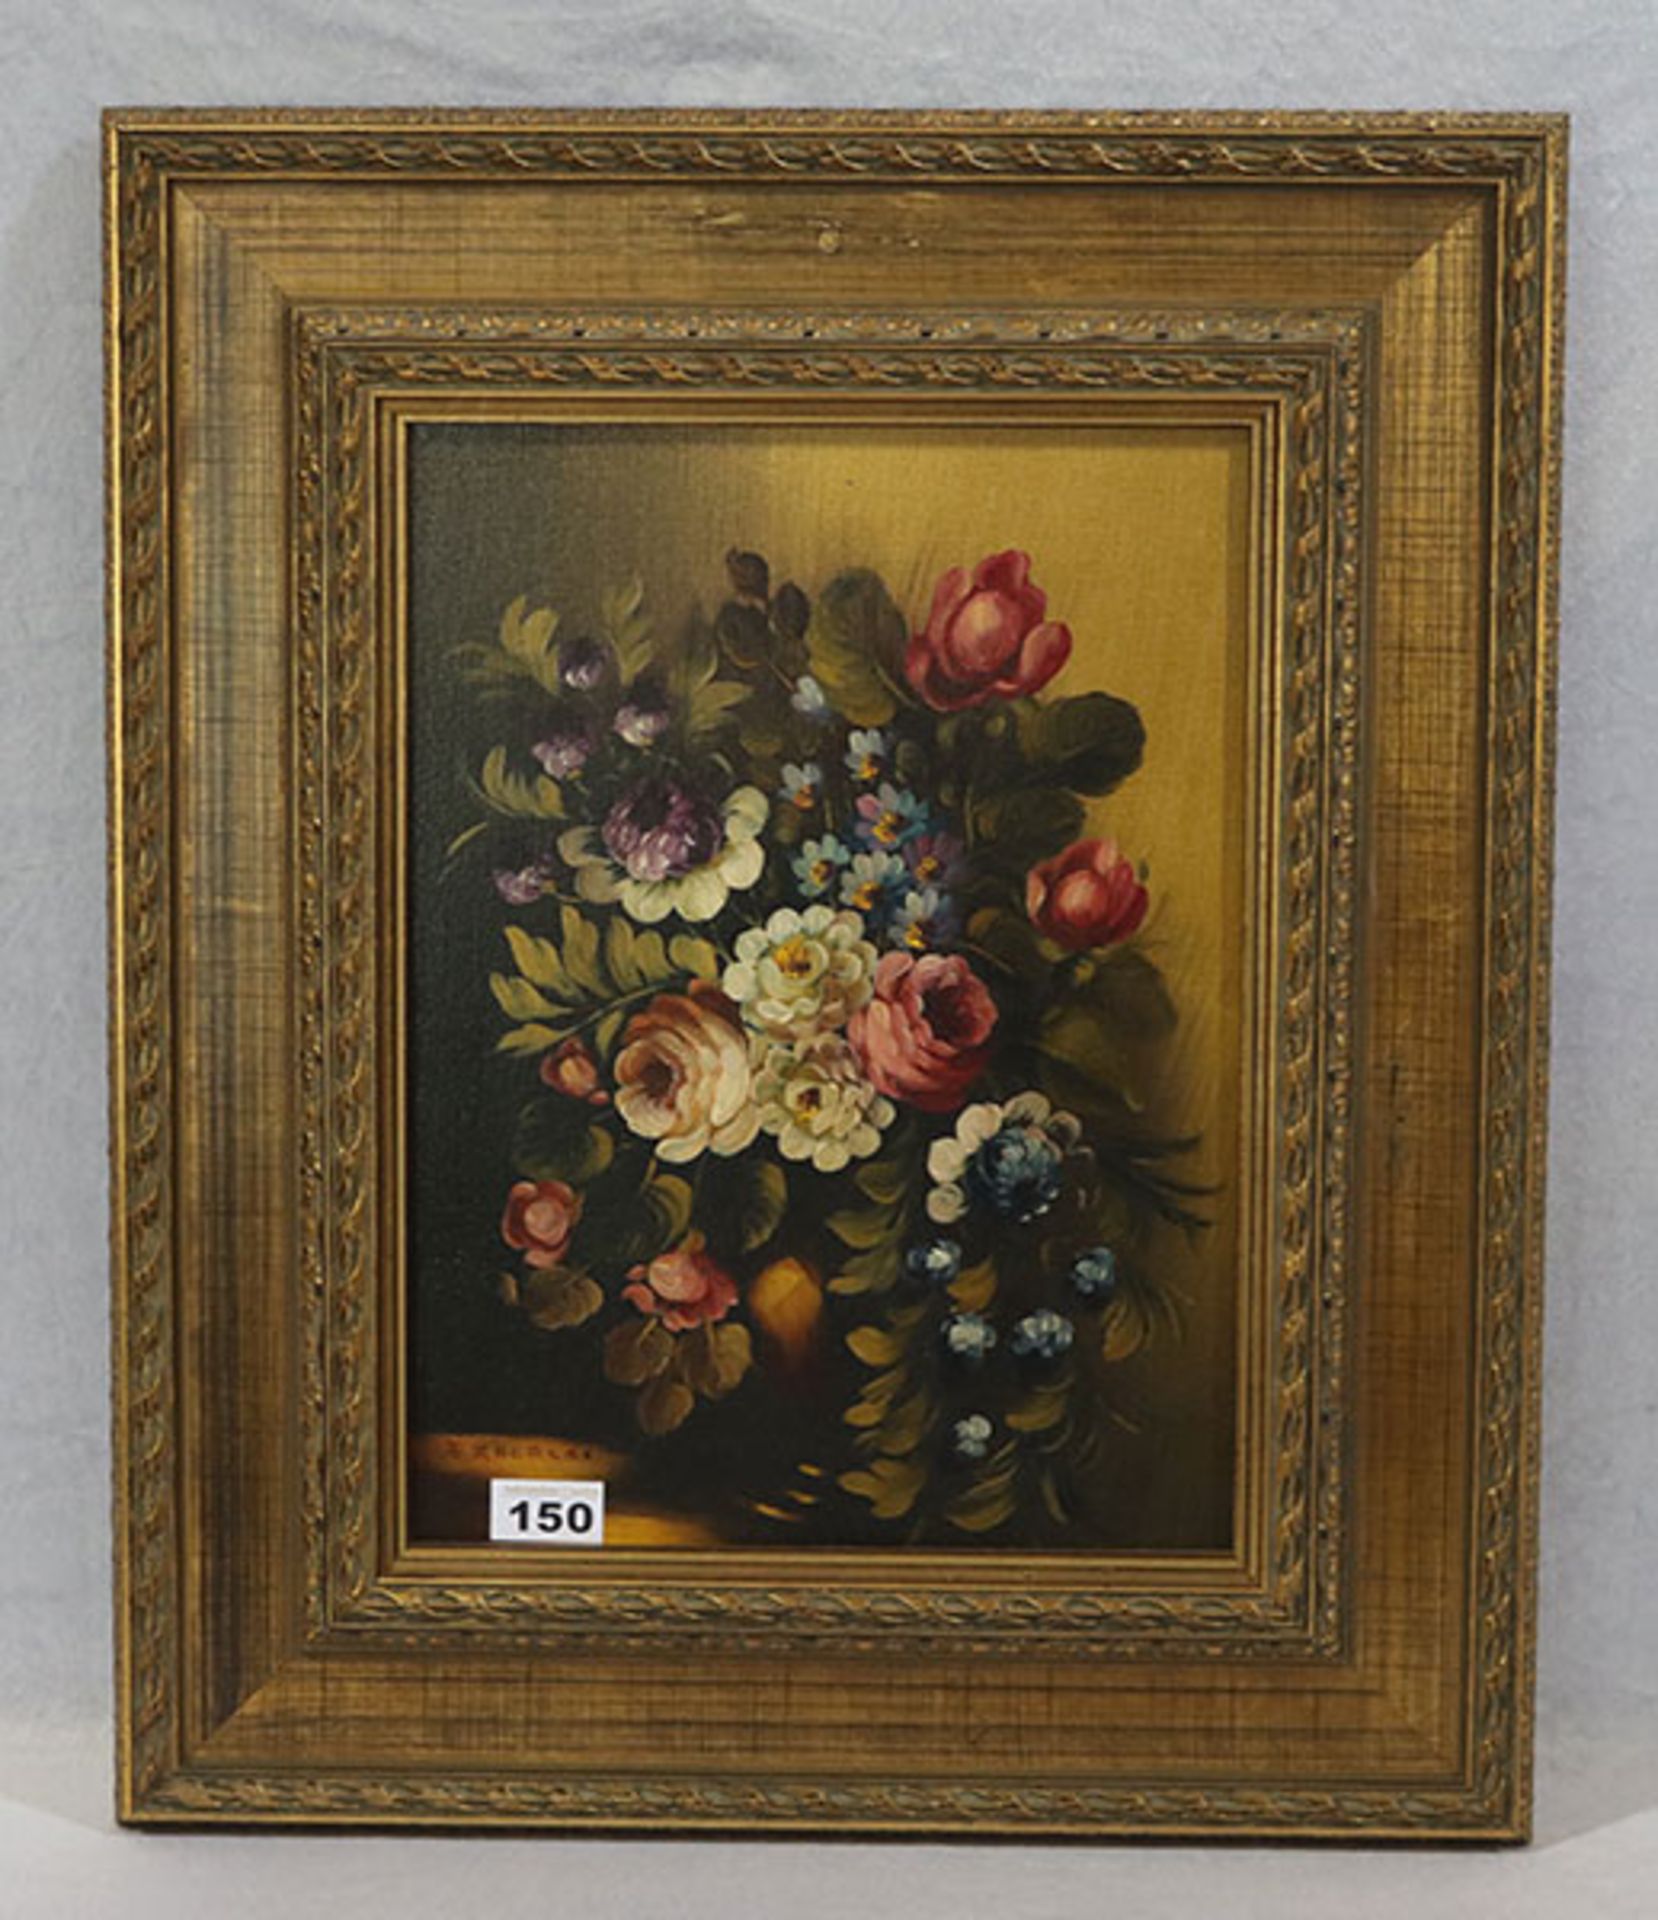 Gemälde ÖL/LW 'Blumenstillleben', signiert Fracassi, gerahmt, incl. Rahmen 58 cm x 50 cm